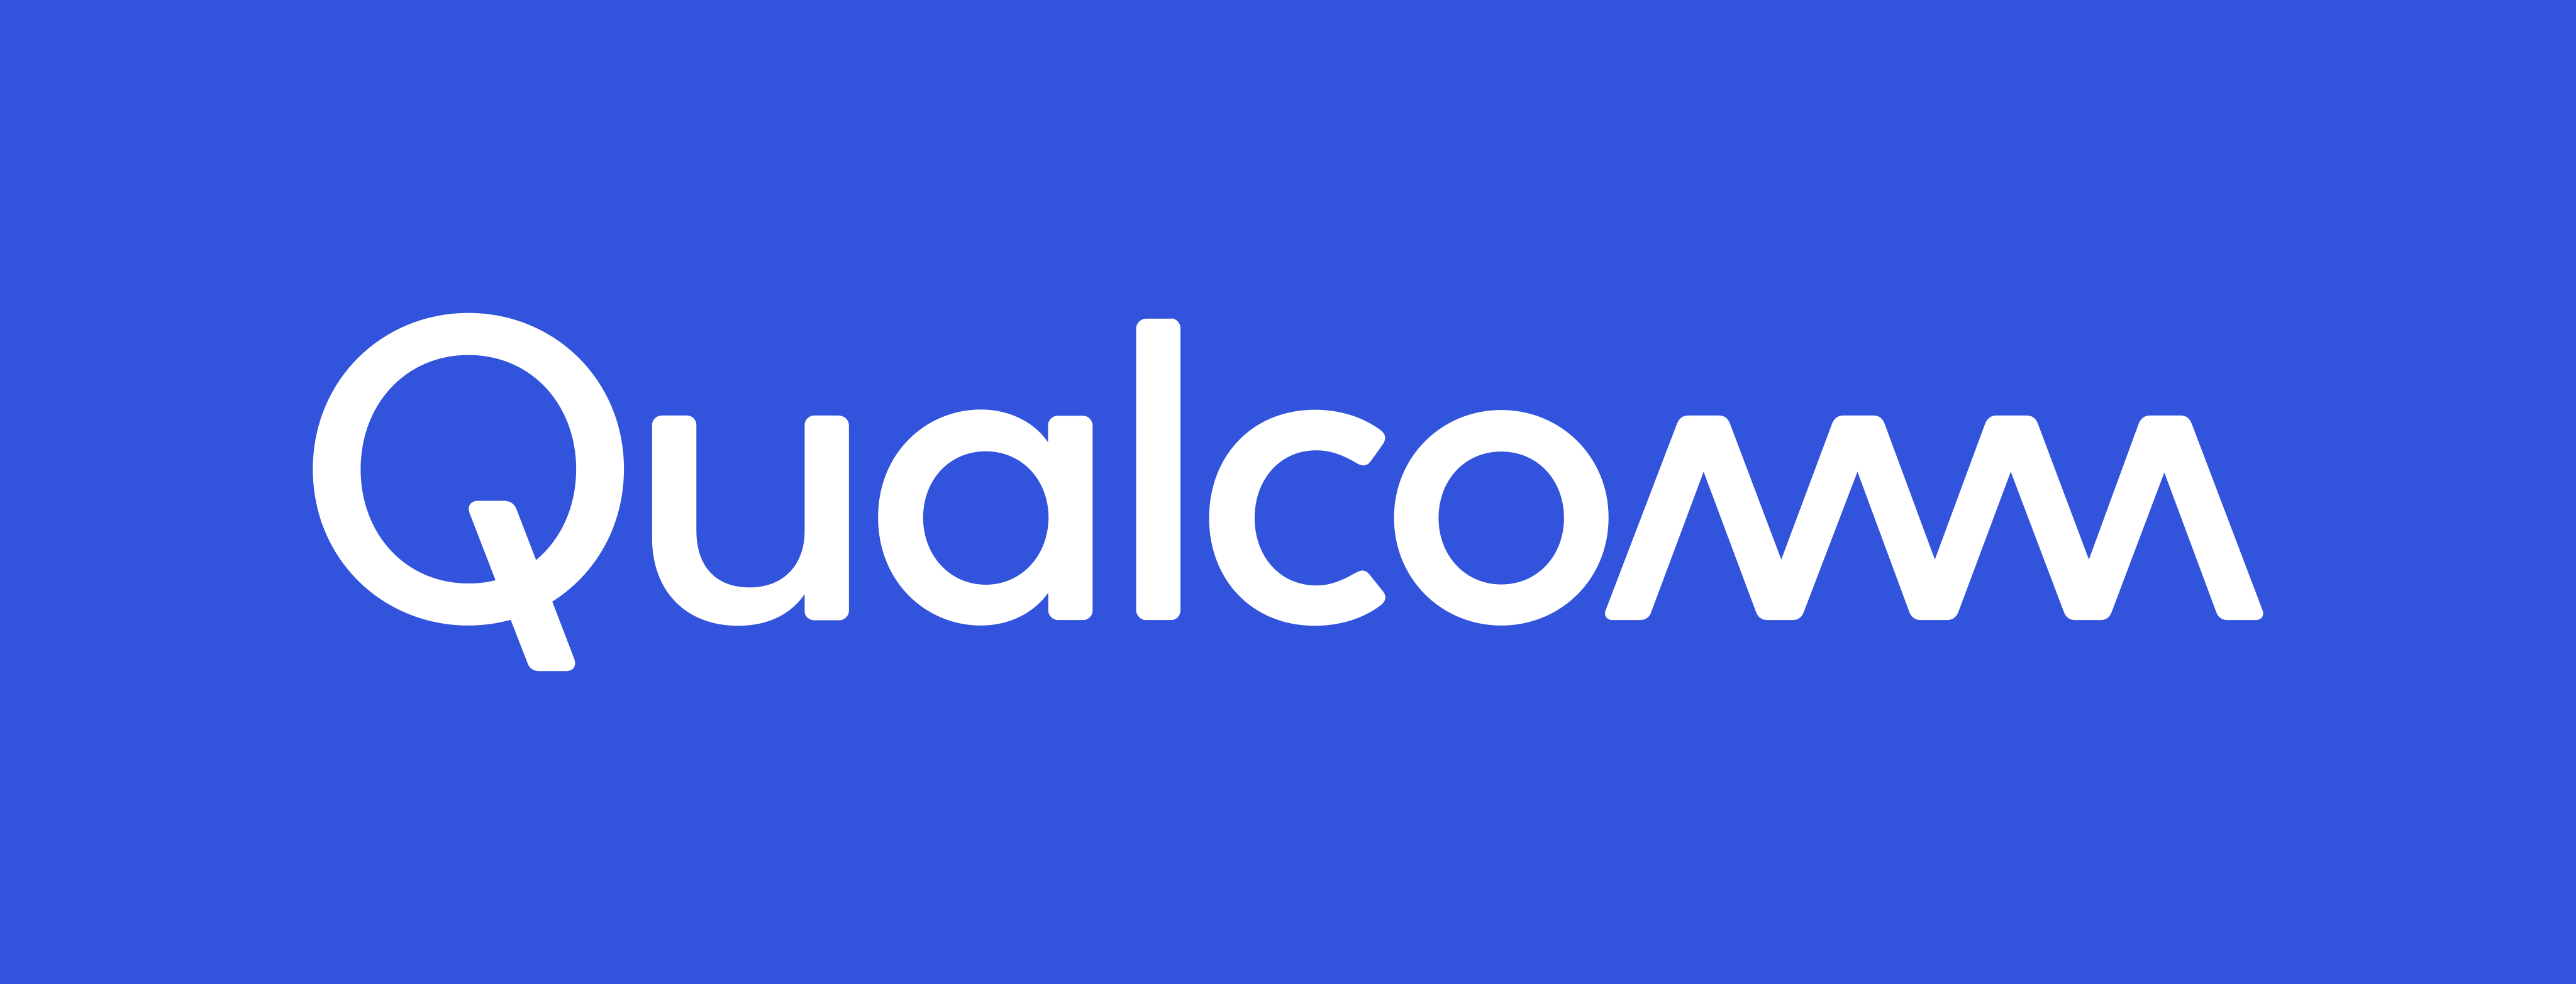 qualcomm logo 3 - Qualcomm Logo